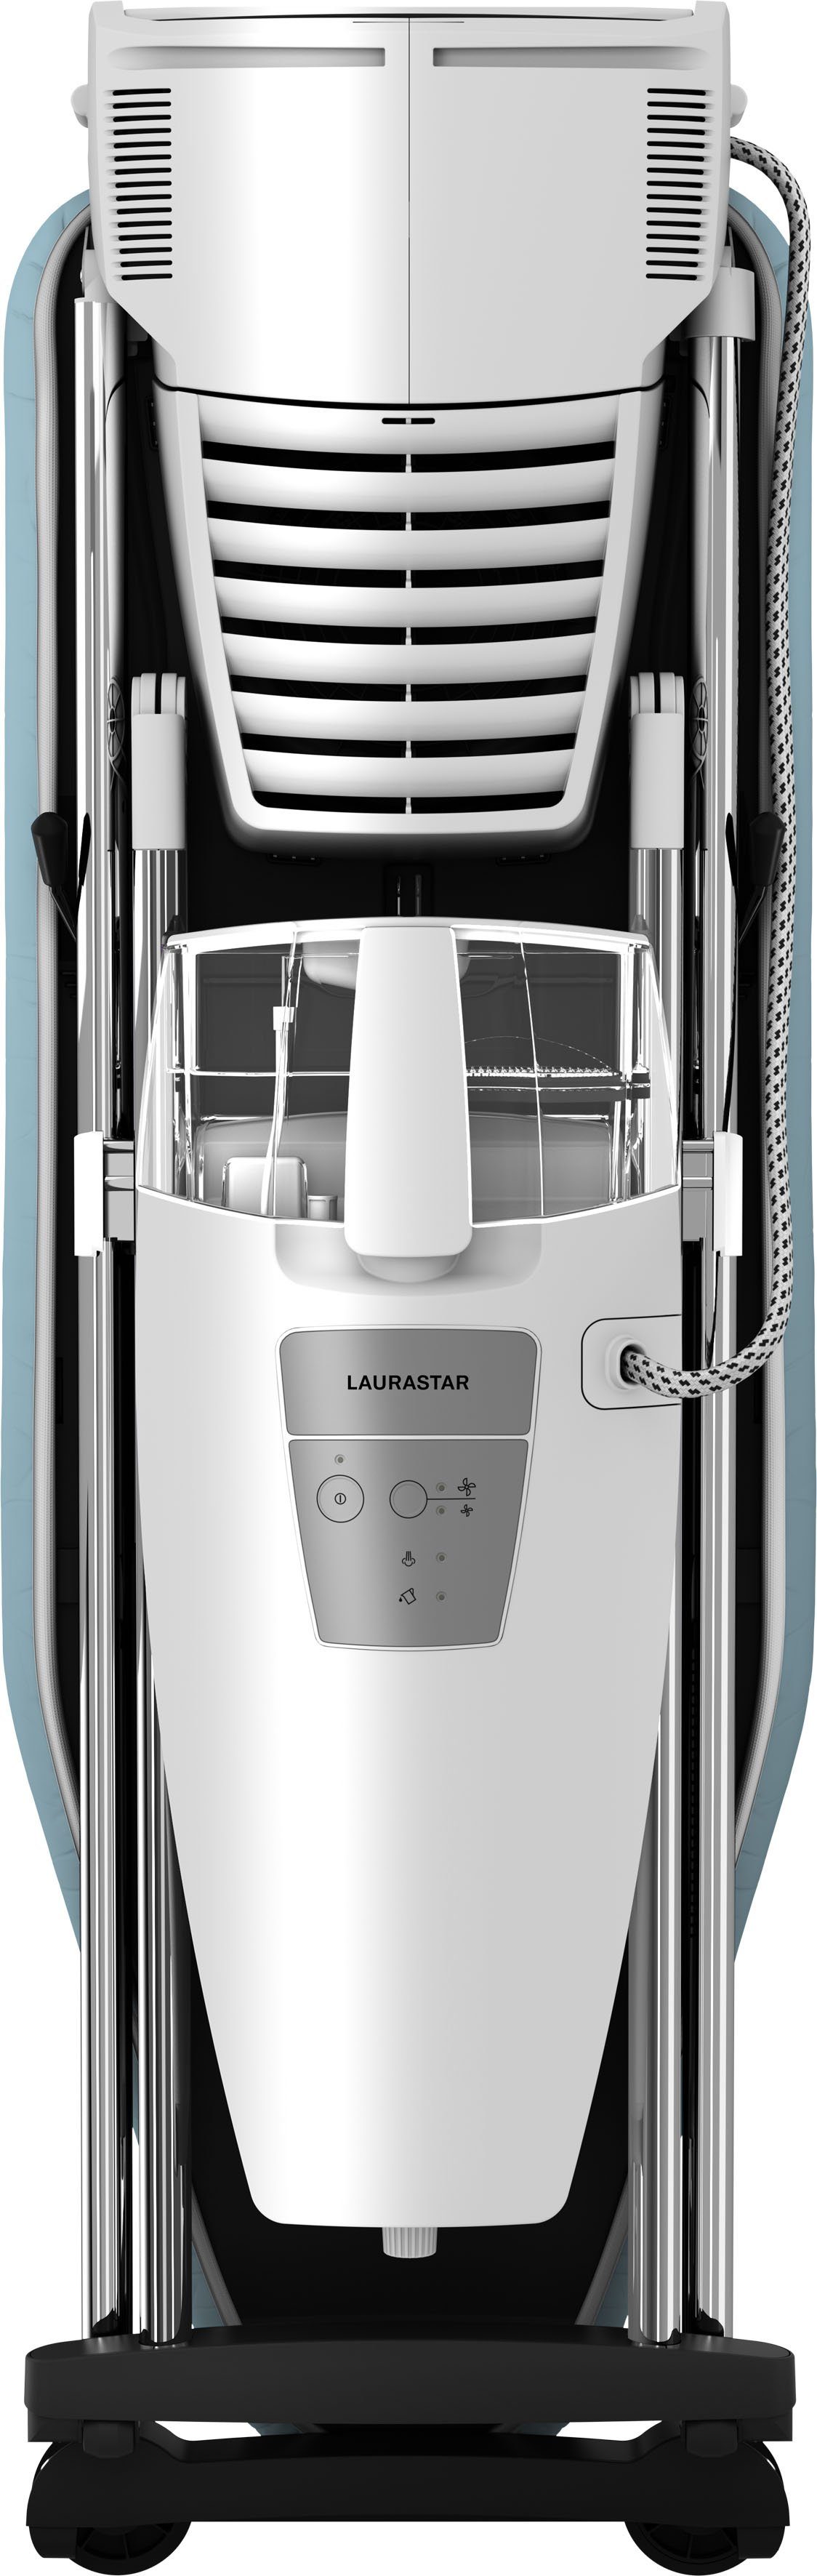 LAURASTAR Bügelsystem S Pure + Xtremecover, W 2200